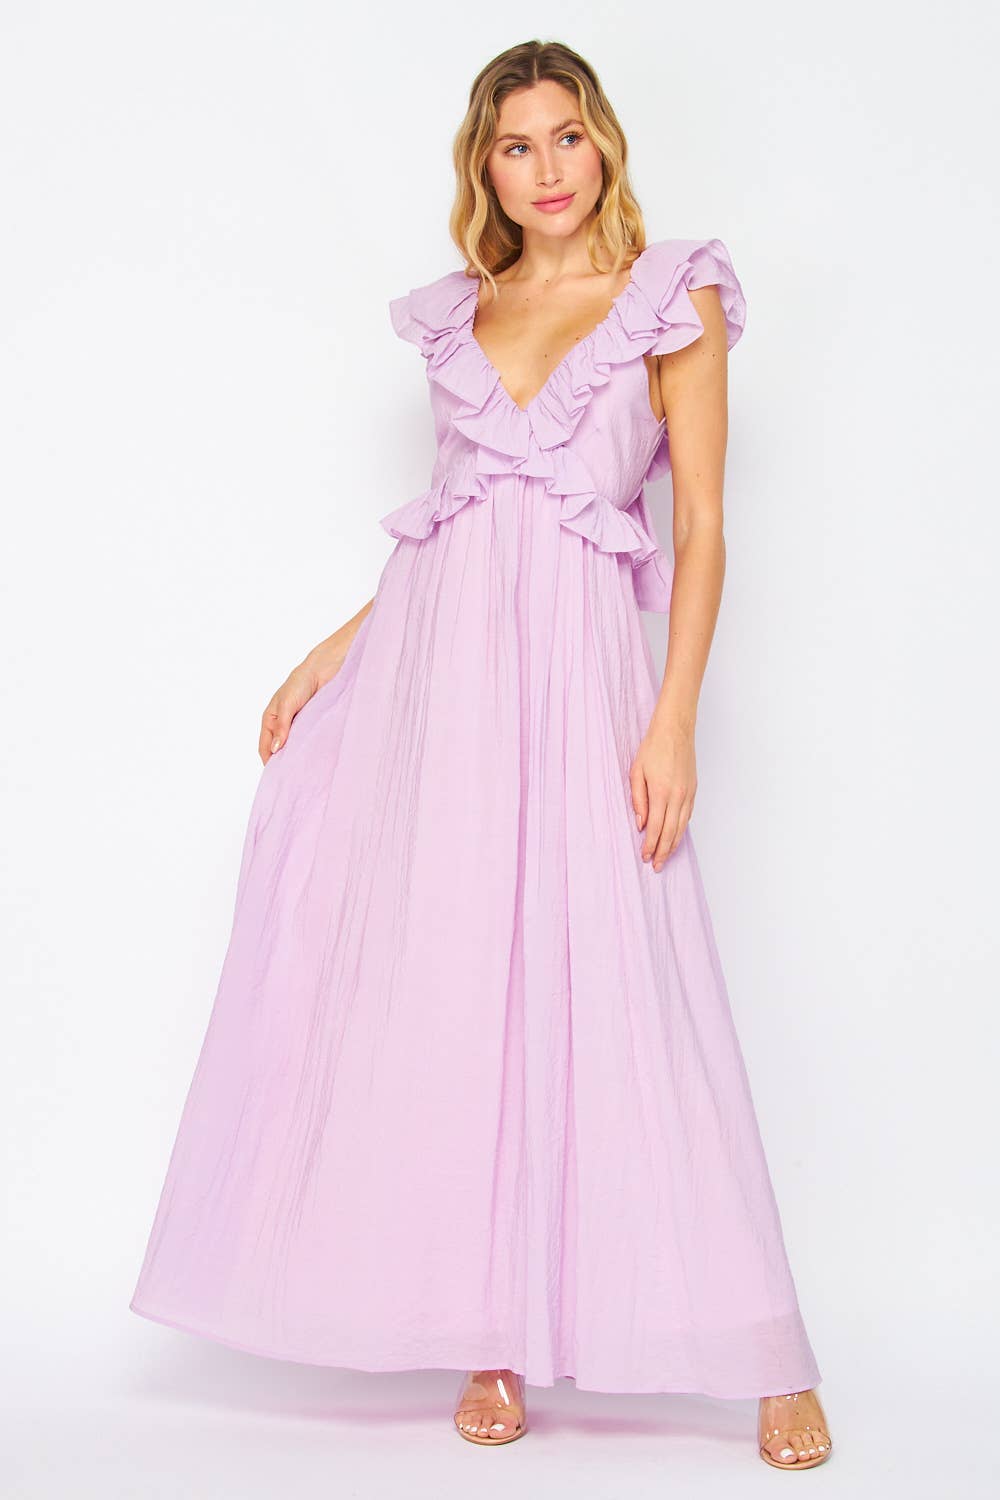 Lavender cross front dress